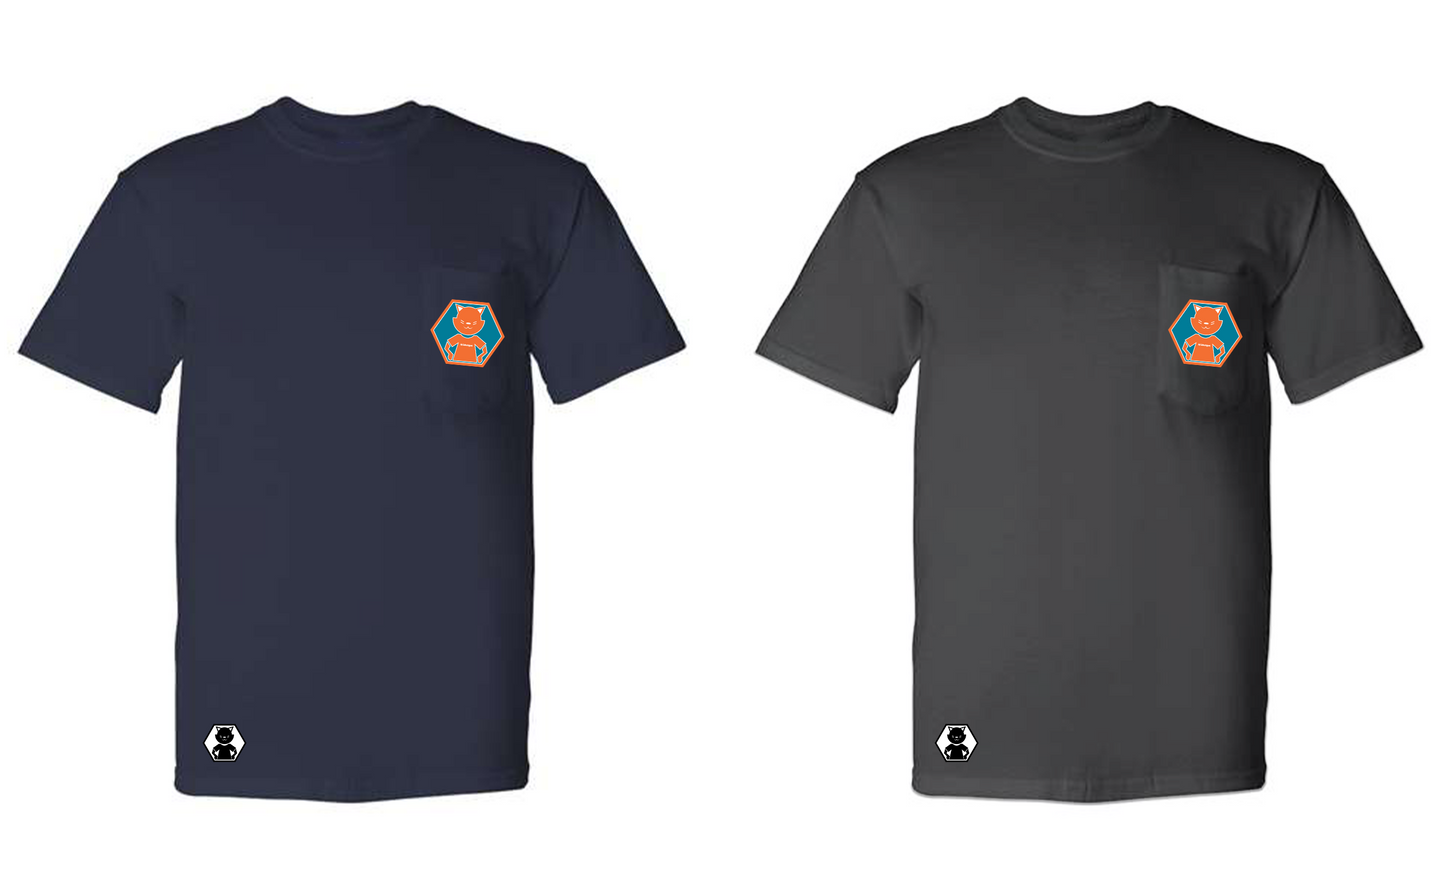 Krichungus (Pocket T-Shirt)